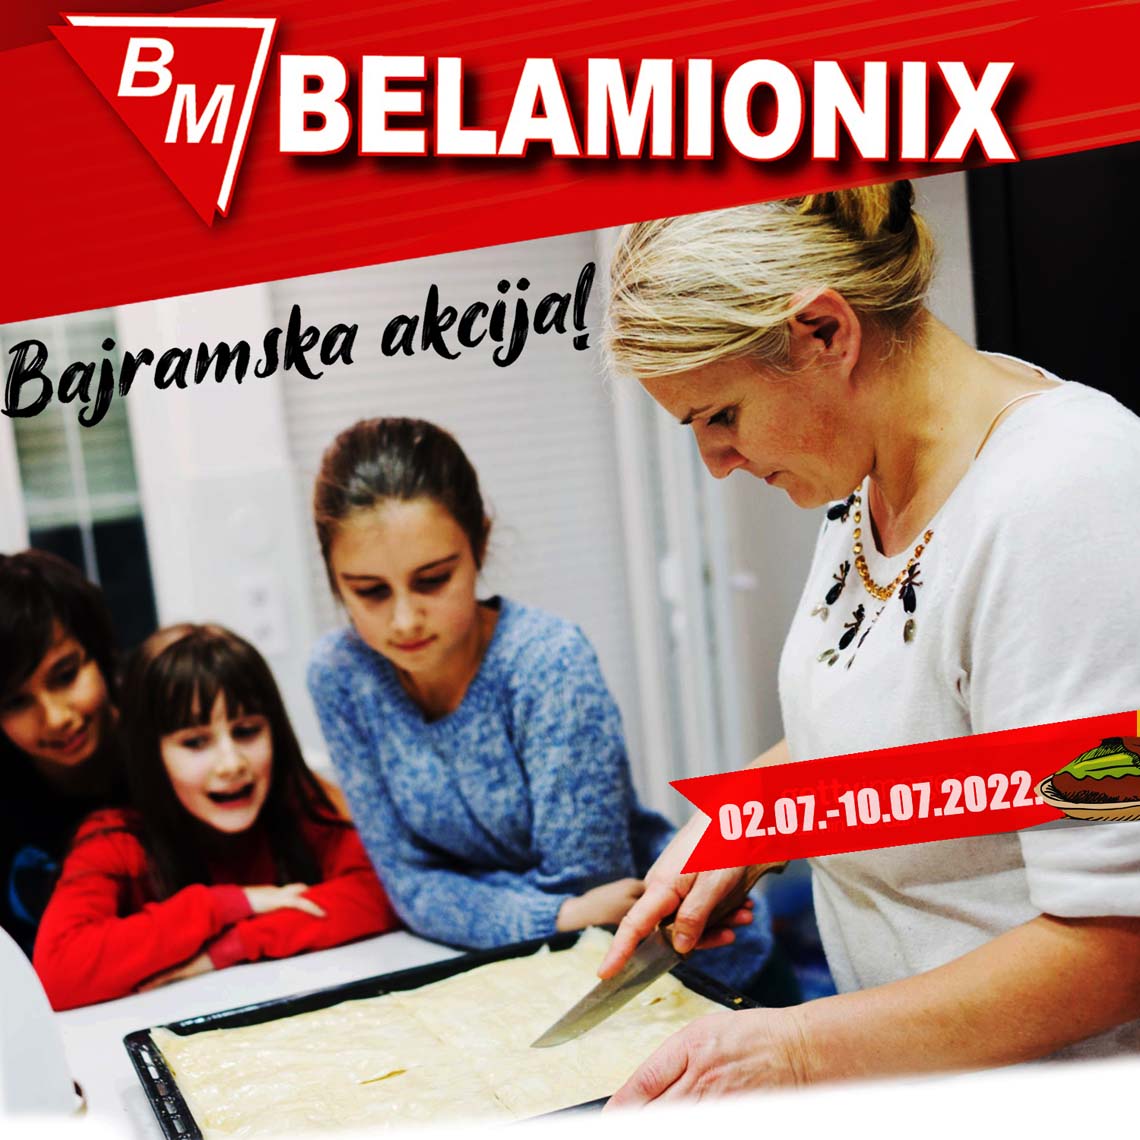 BELAMIONIX